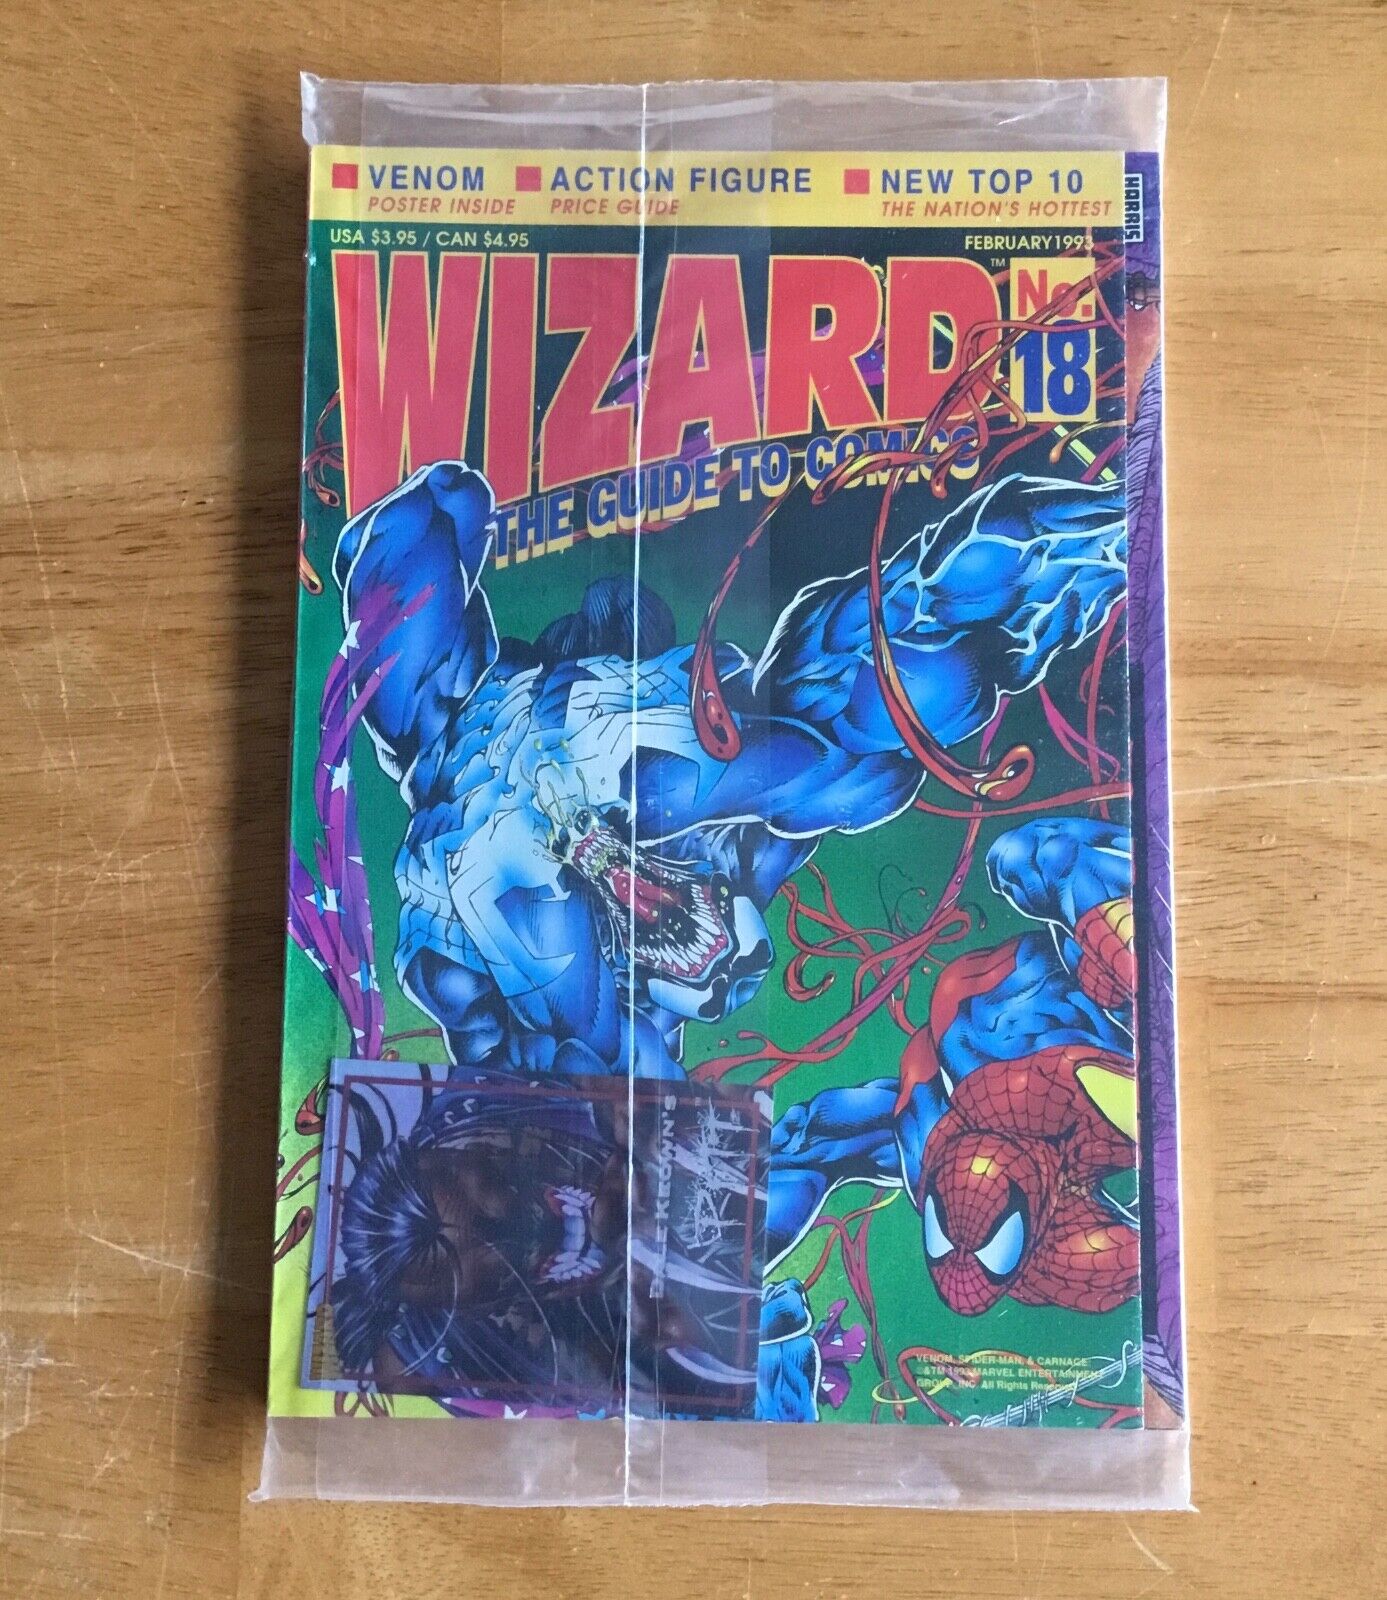 Wizard #18 Guide to Comics Magazine Spider-Man Venom Poster Pitt Card Sealed